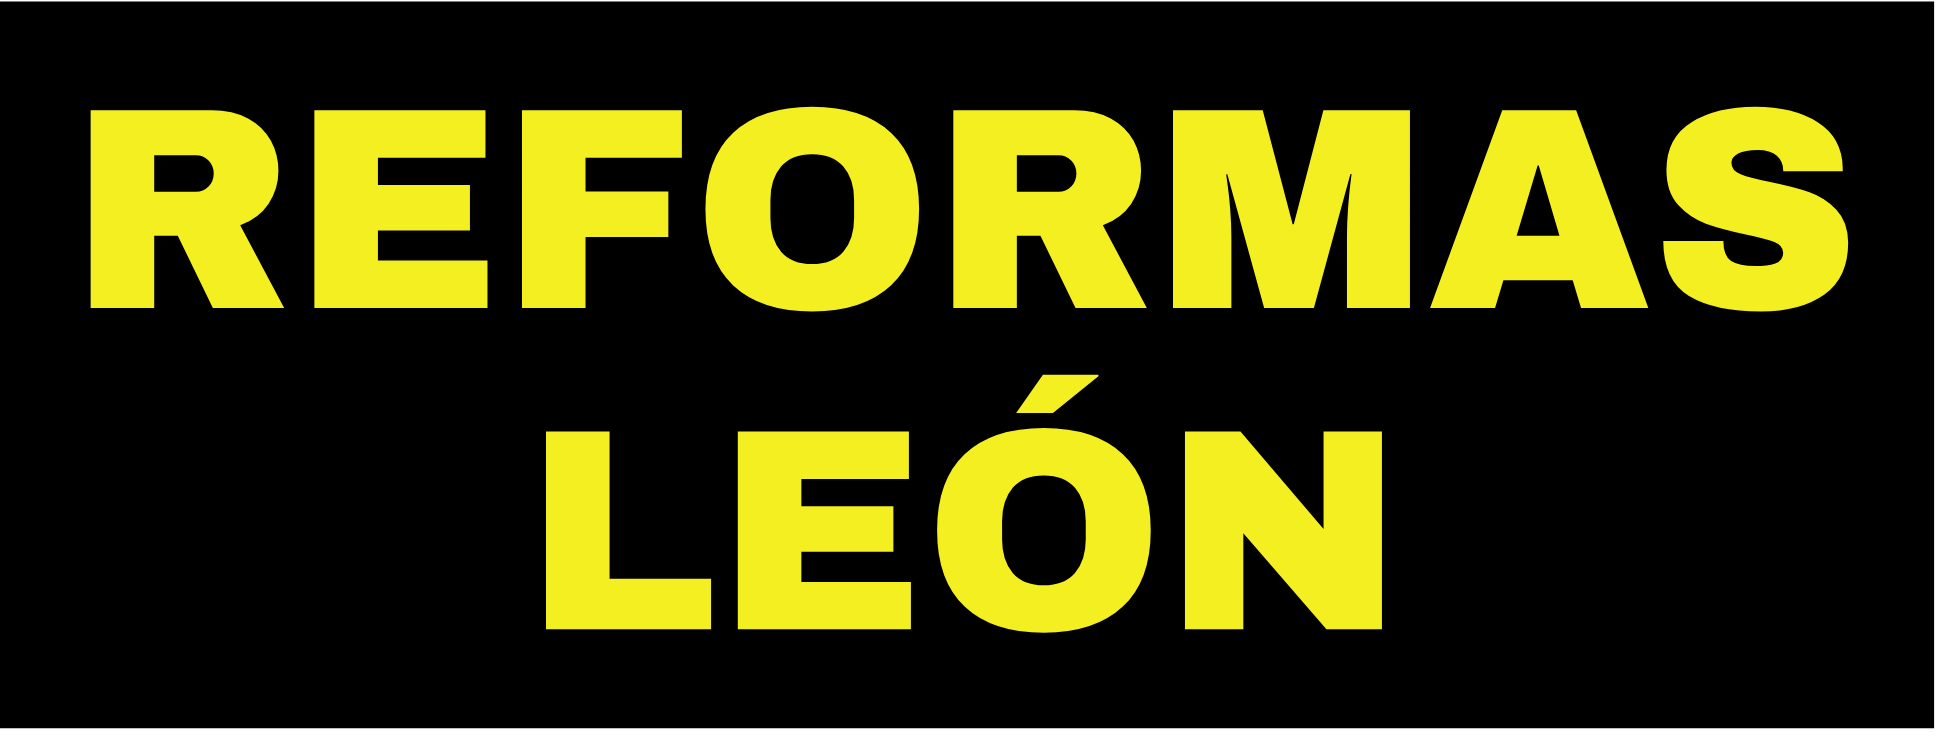 Reformas Leon